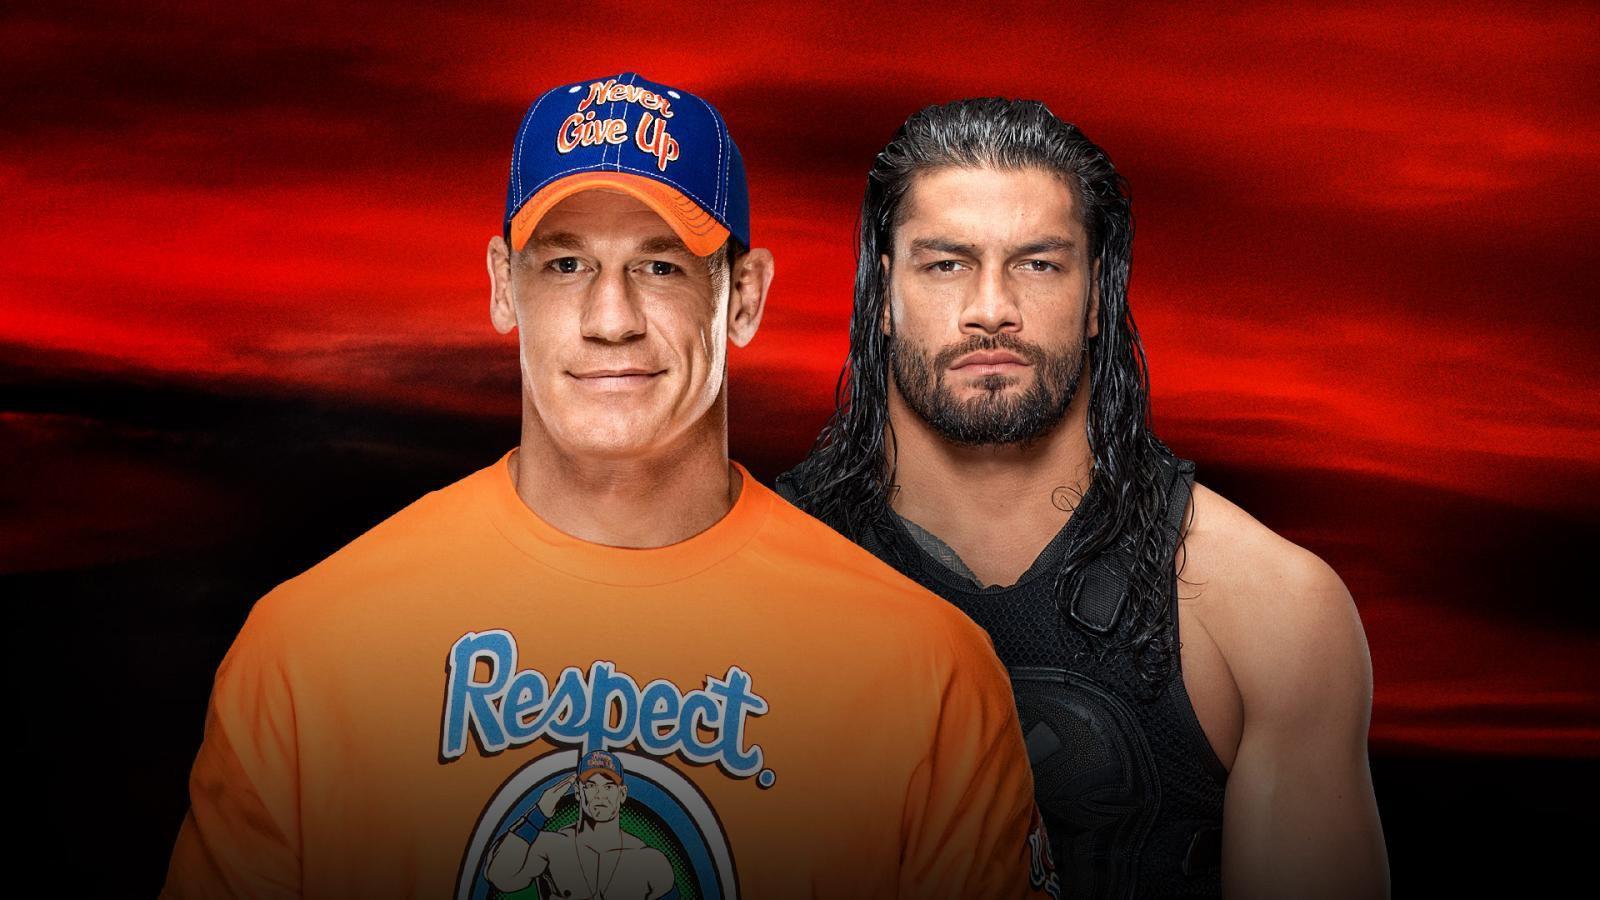 John Cena vs. Roman Reigns match set for WWE No Mercy 2017